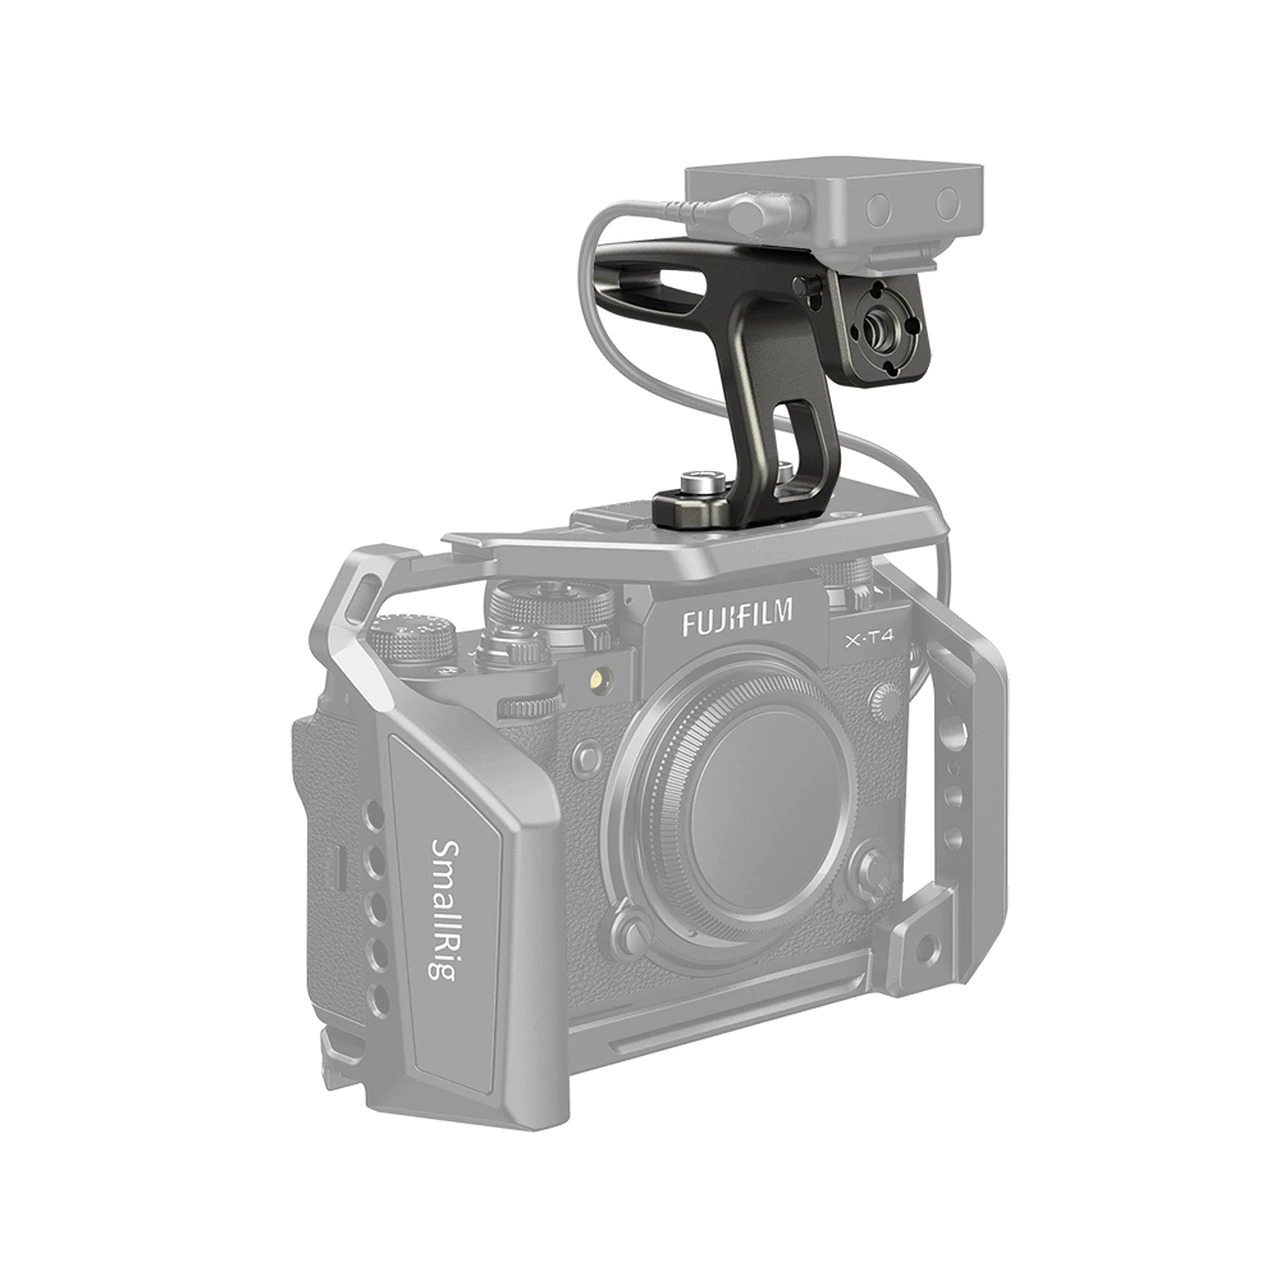 SmallRig Mini Top Handle for Light-weight Cameras (1/4 inches -20 Screws) HTS2756 ด้ามจับบนชุดริก สำหรับกล้อง DSLR, Mirrorless หรือกล้องขนาดเล็ก ราคา 1200 บาท